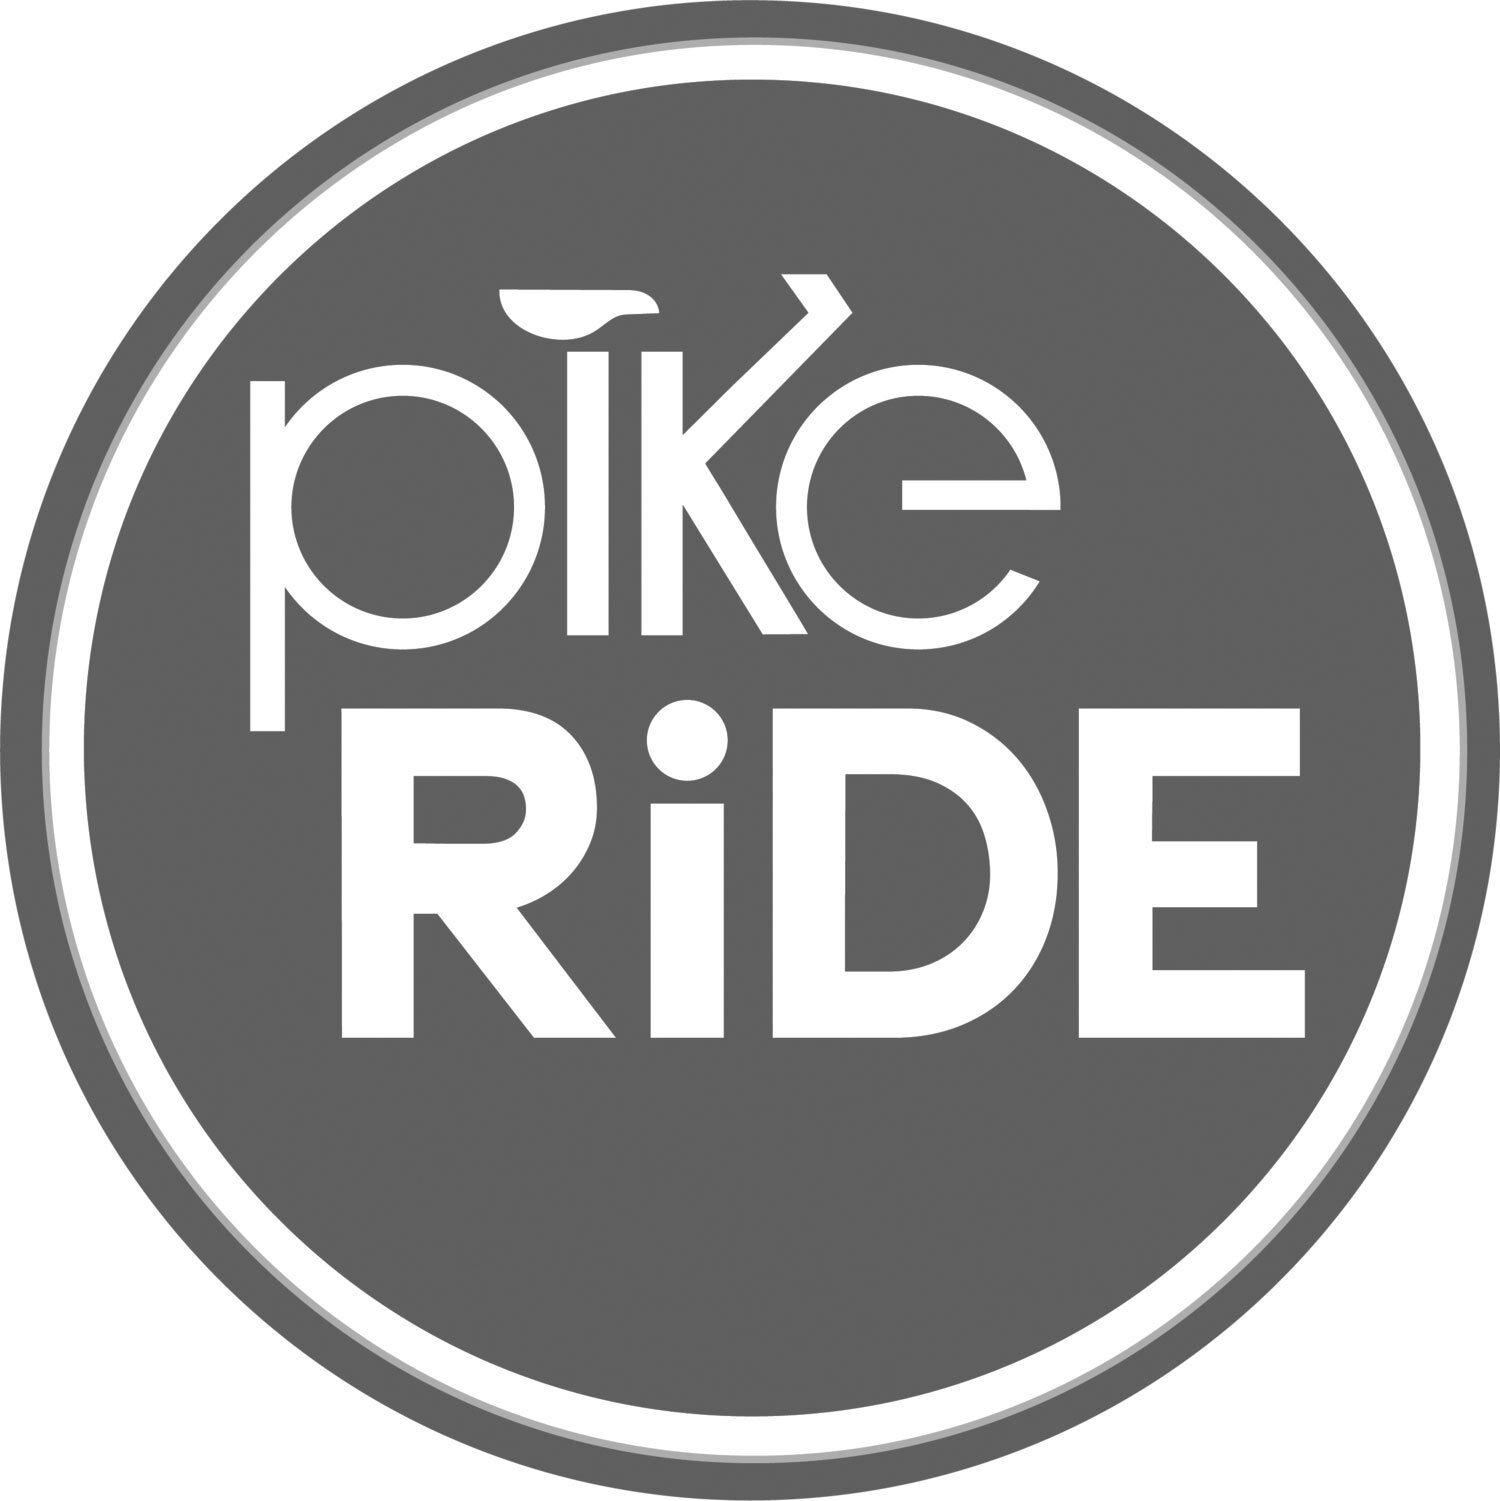 PikeRide+Round+bw+logo.jpg